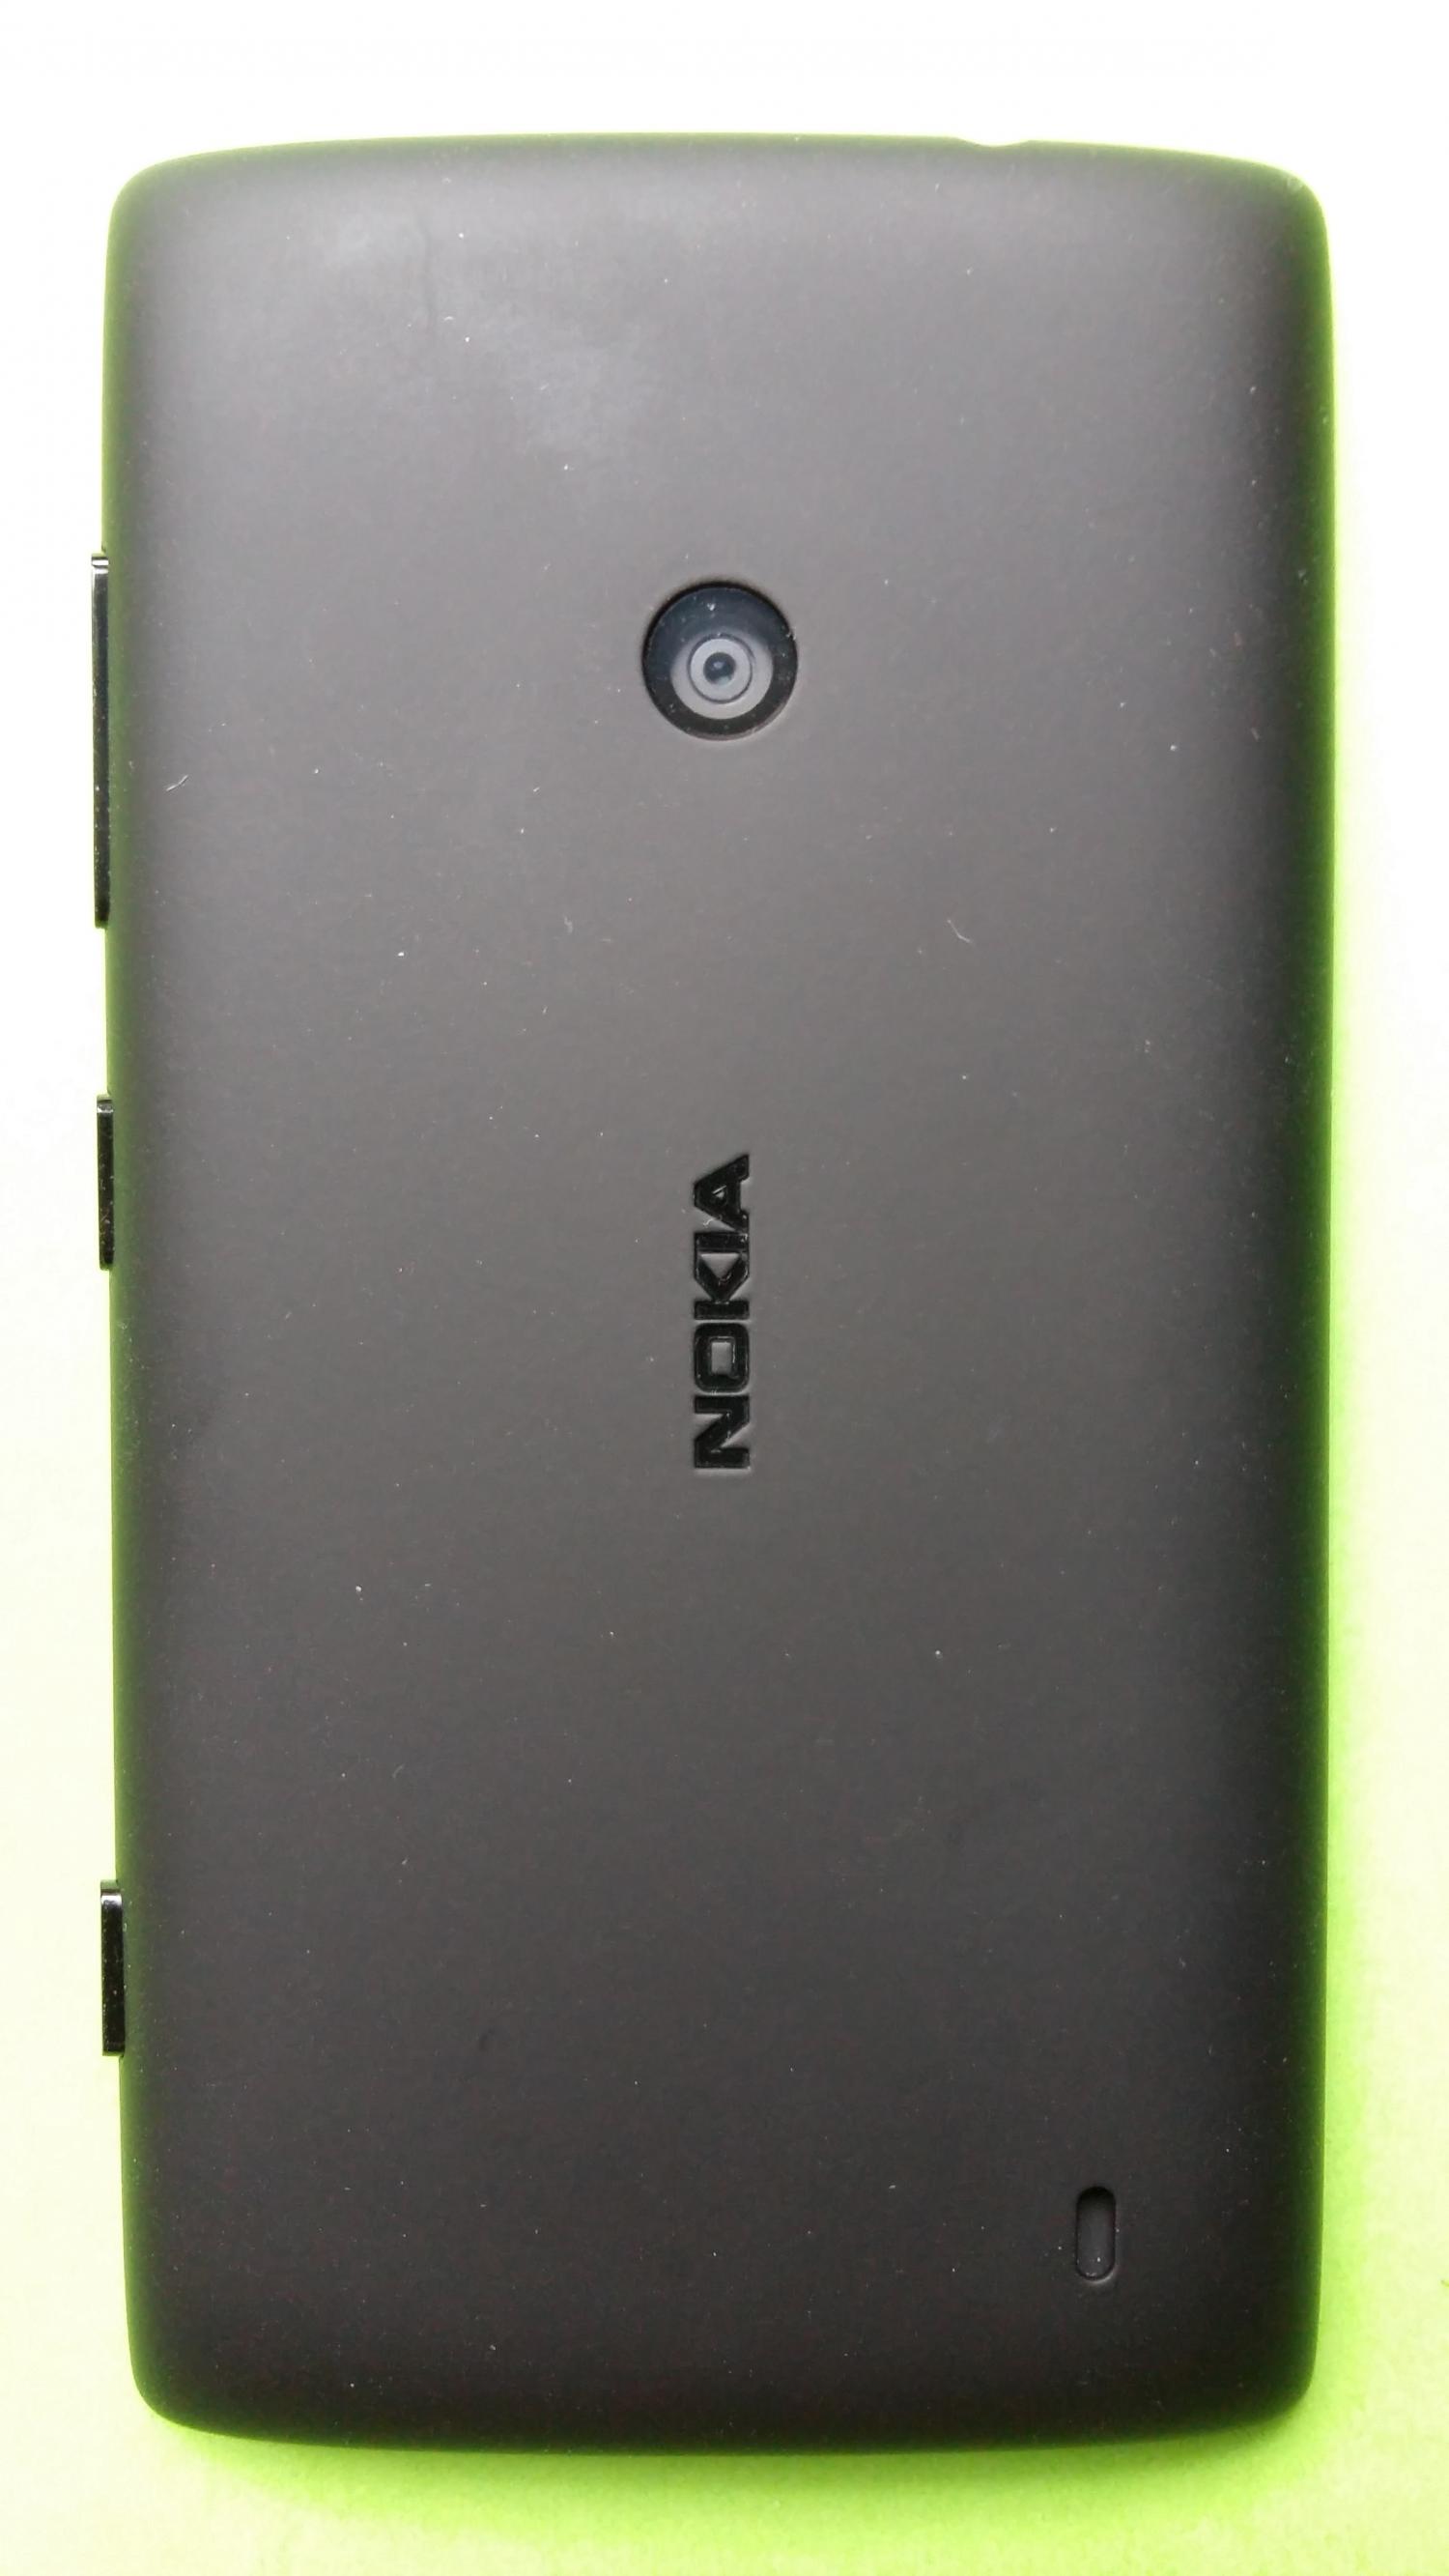 image-7300231-Nokia 520 Lumia (1)2.jpg